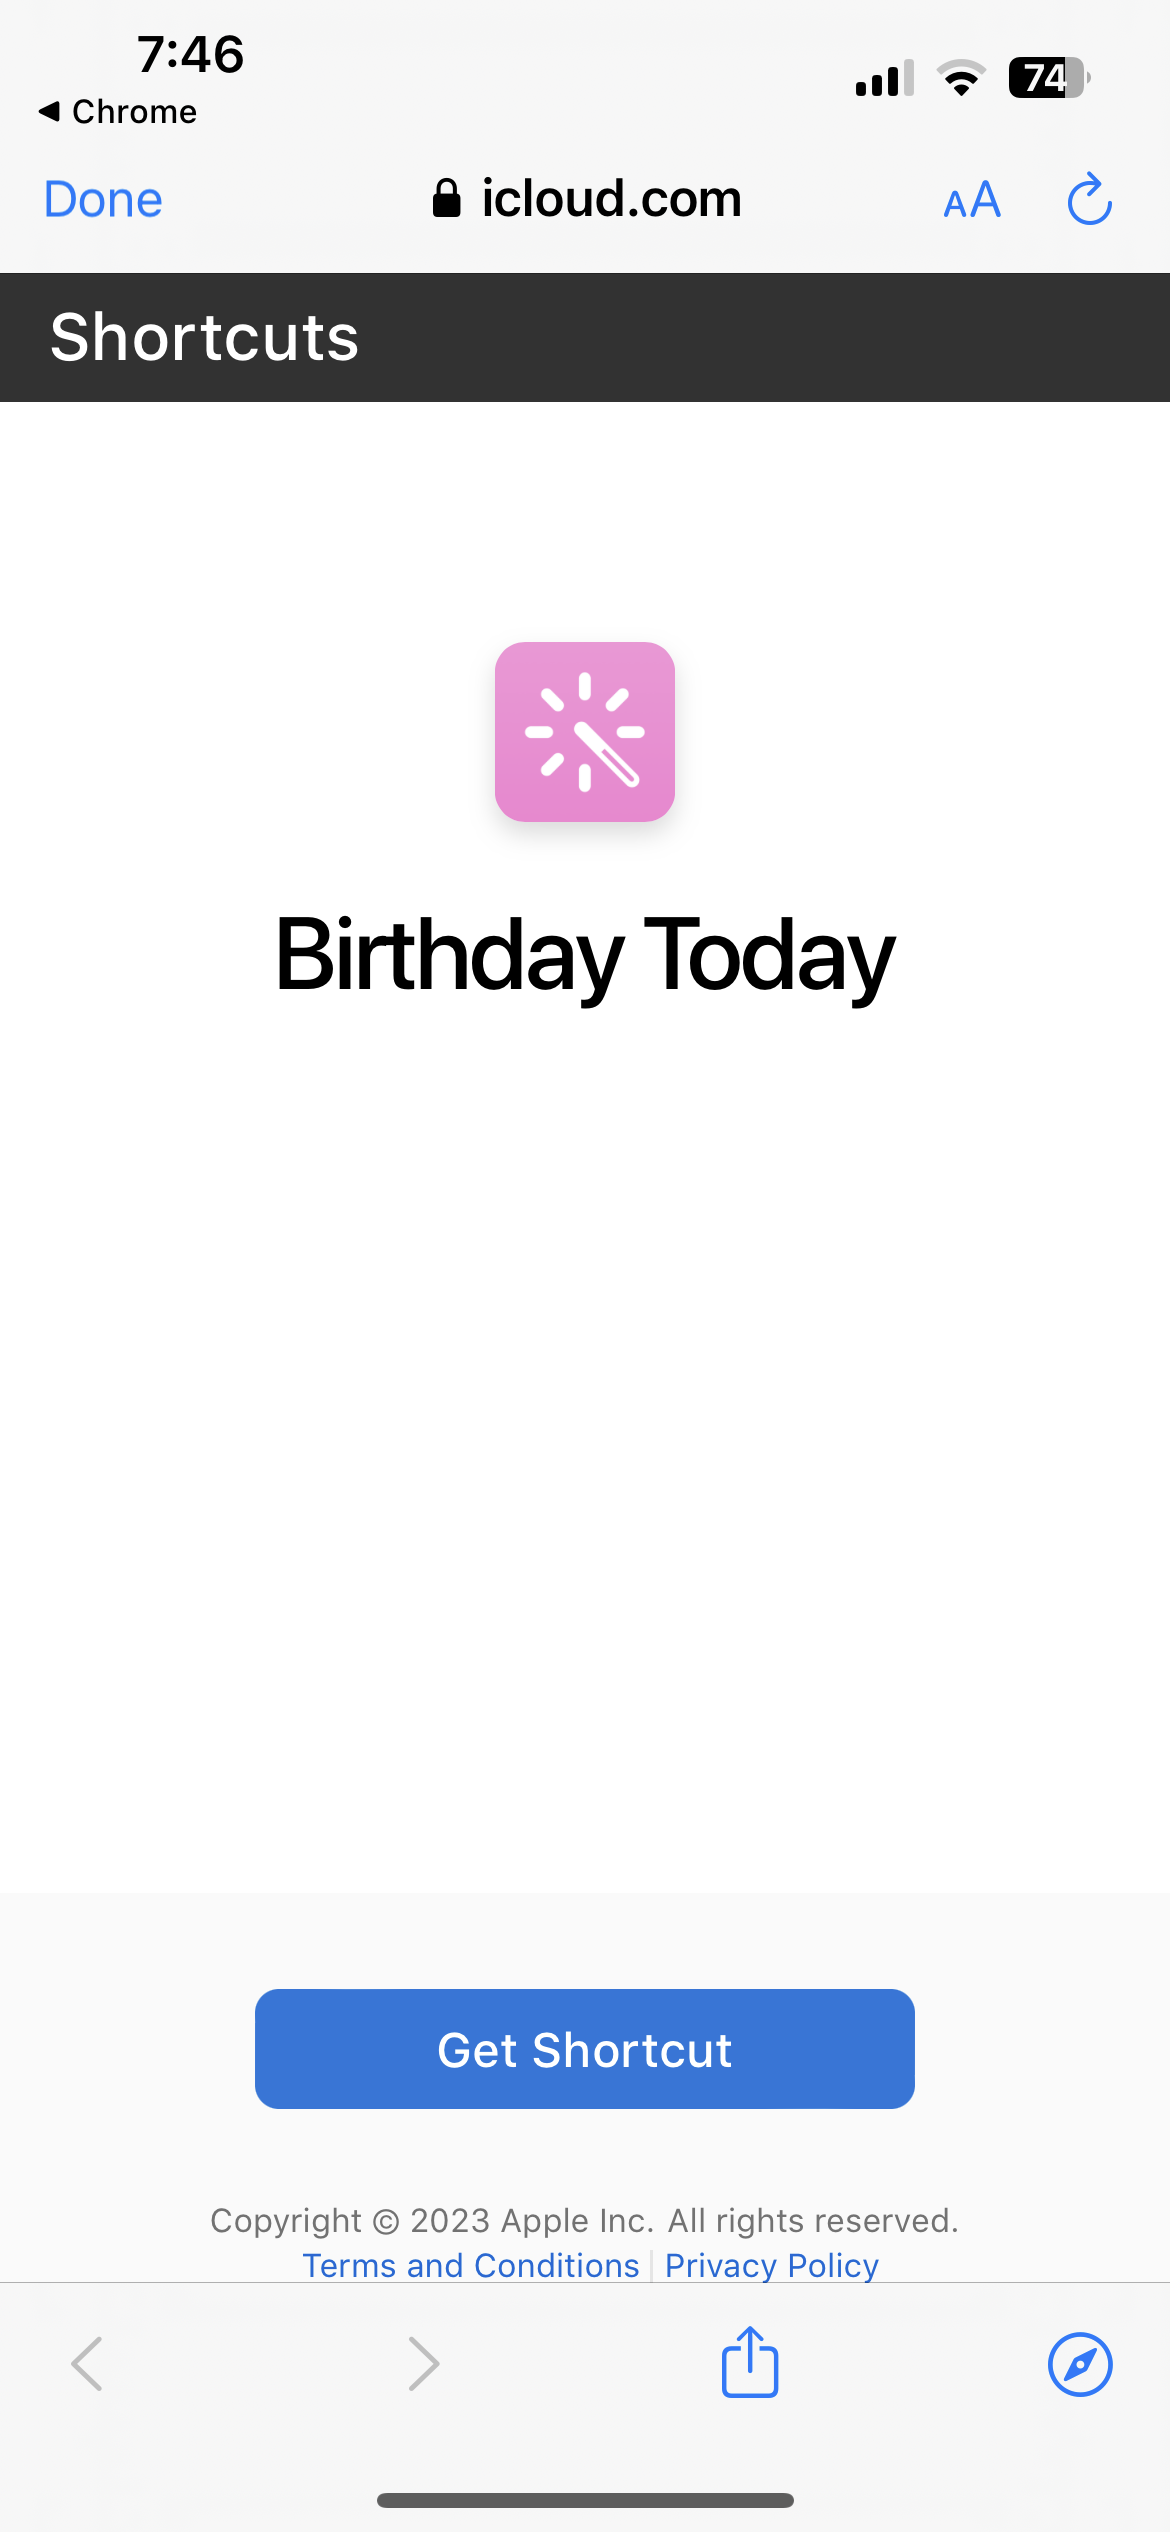 Screen grab showing Birthday Today Shortcut